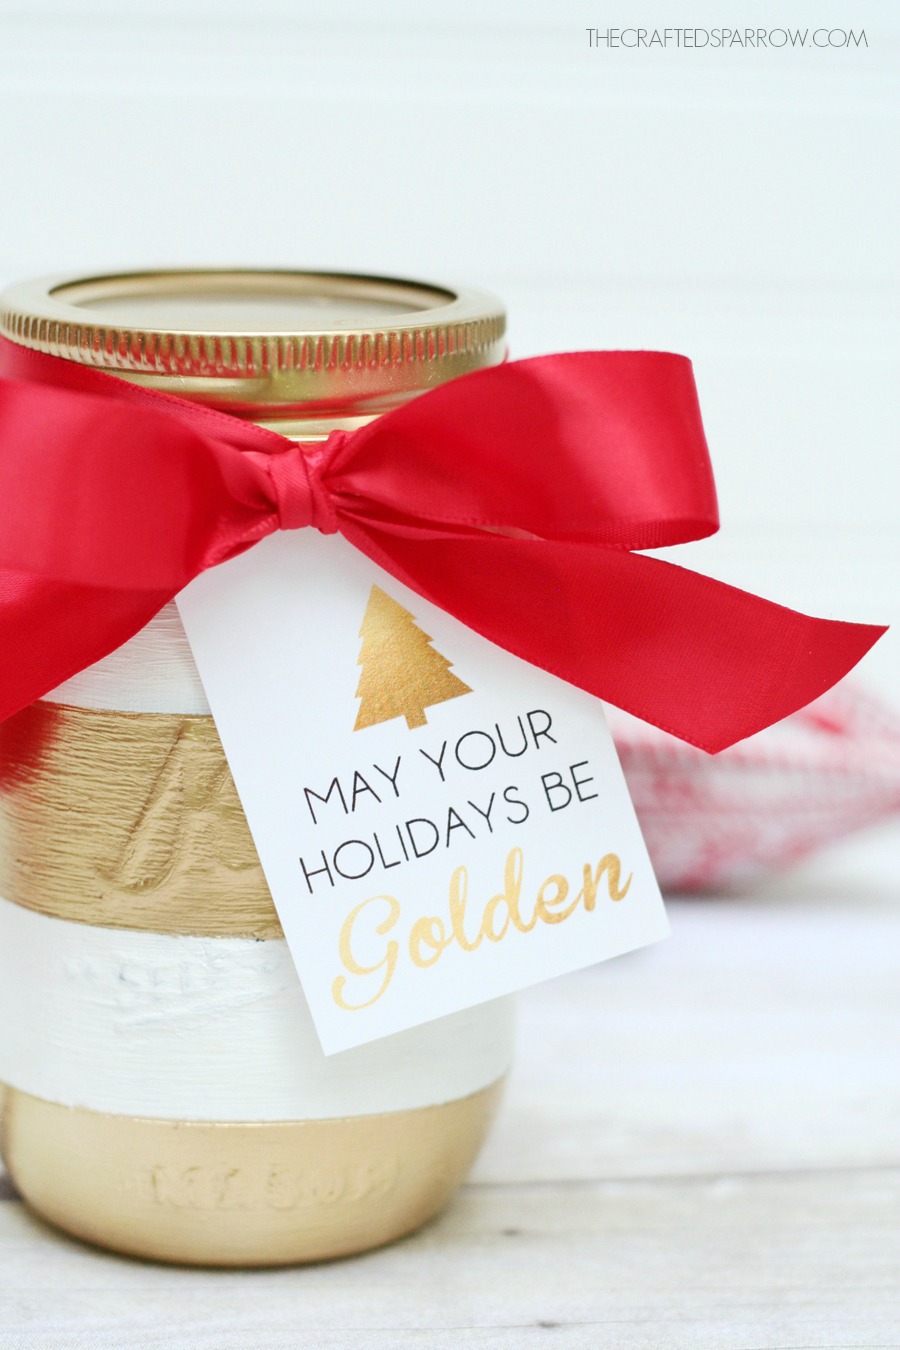 Gold Striped Mason Jar + Free Printable Holiday Tags